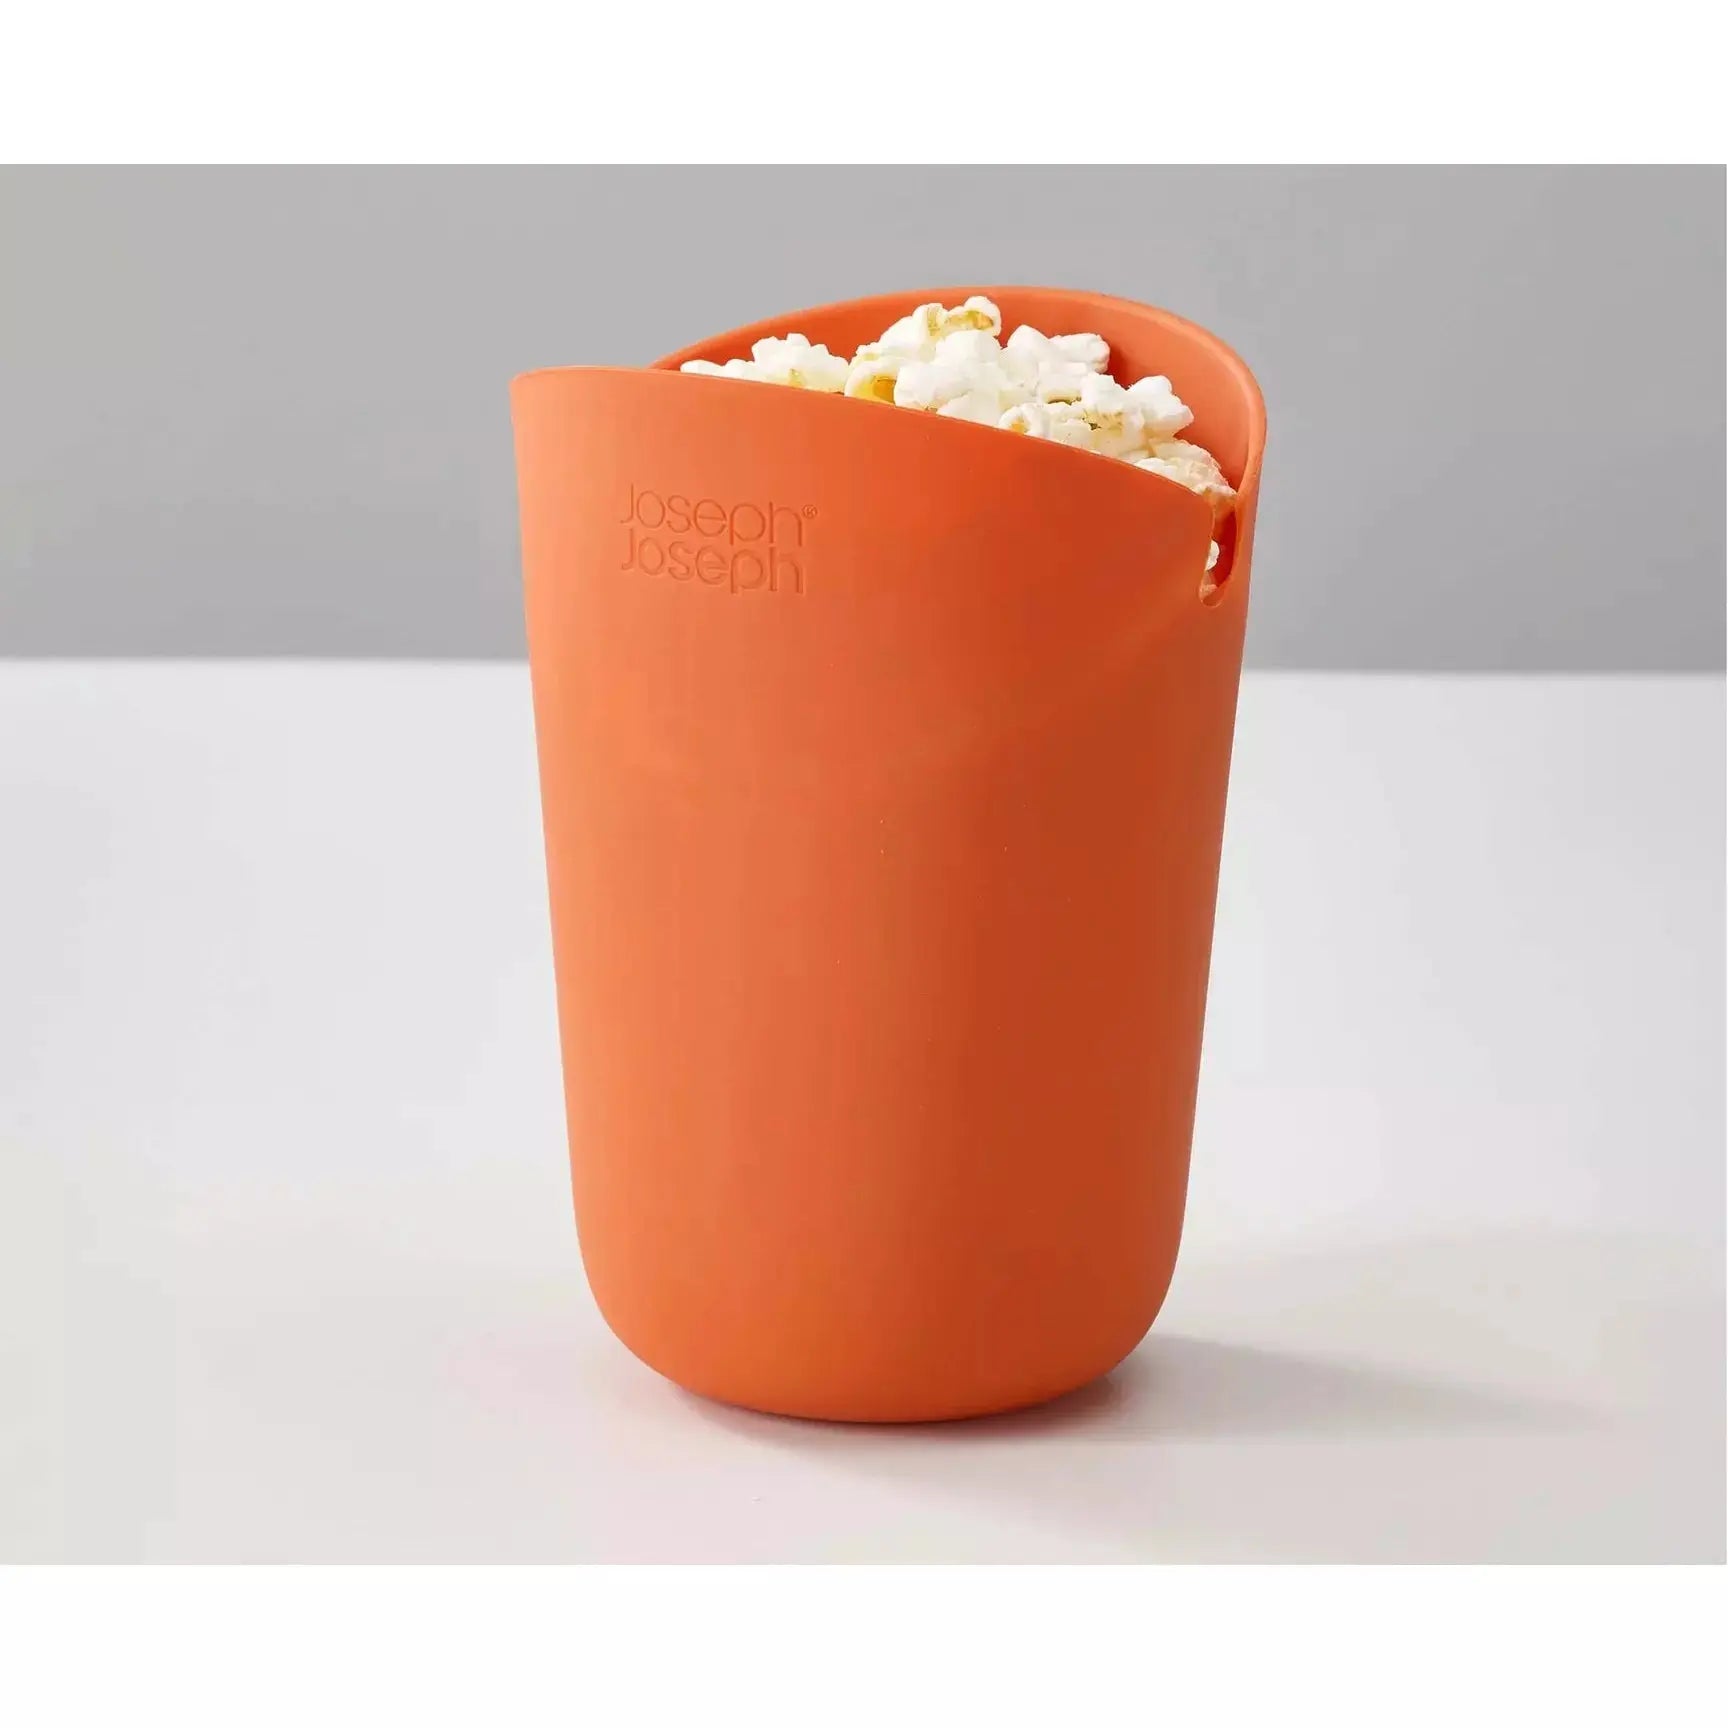 Joseph Joseph M-Cuisine Popcorn Maker 2pc (Orange/Grey) JOSEPH JOSEPH